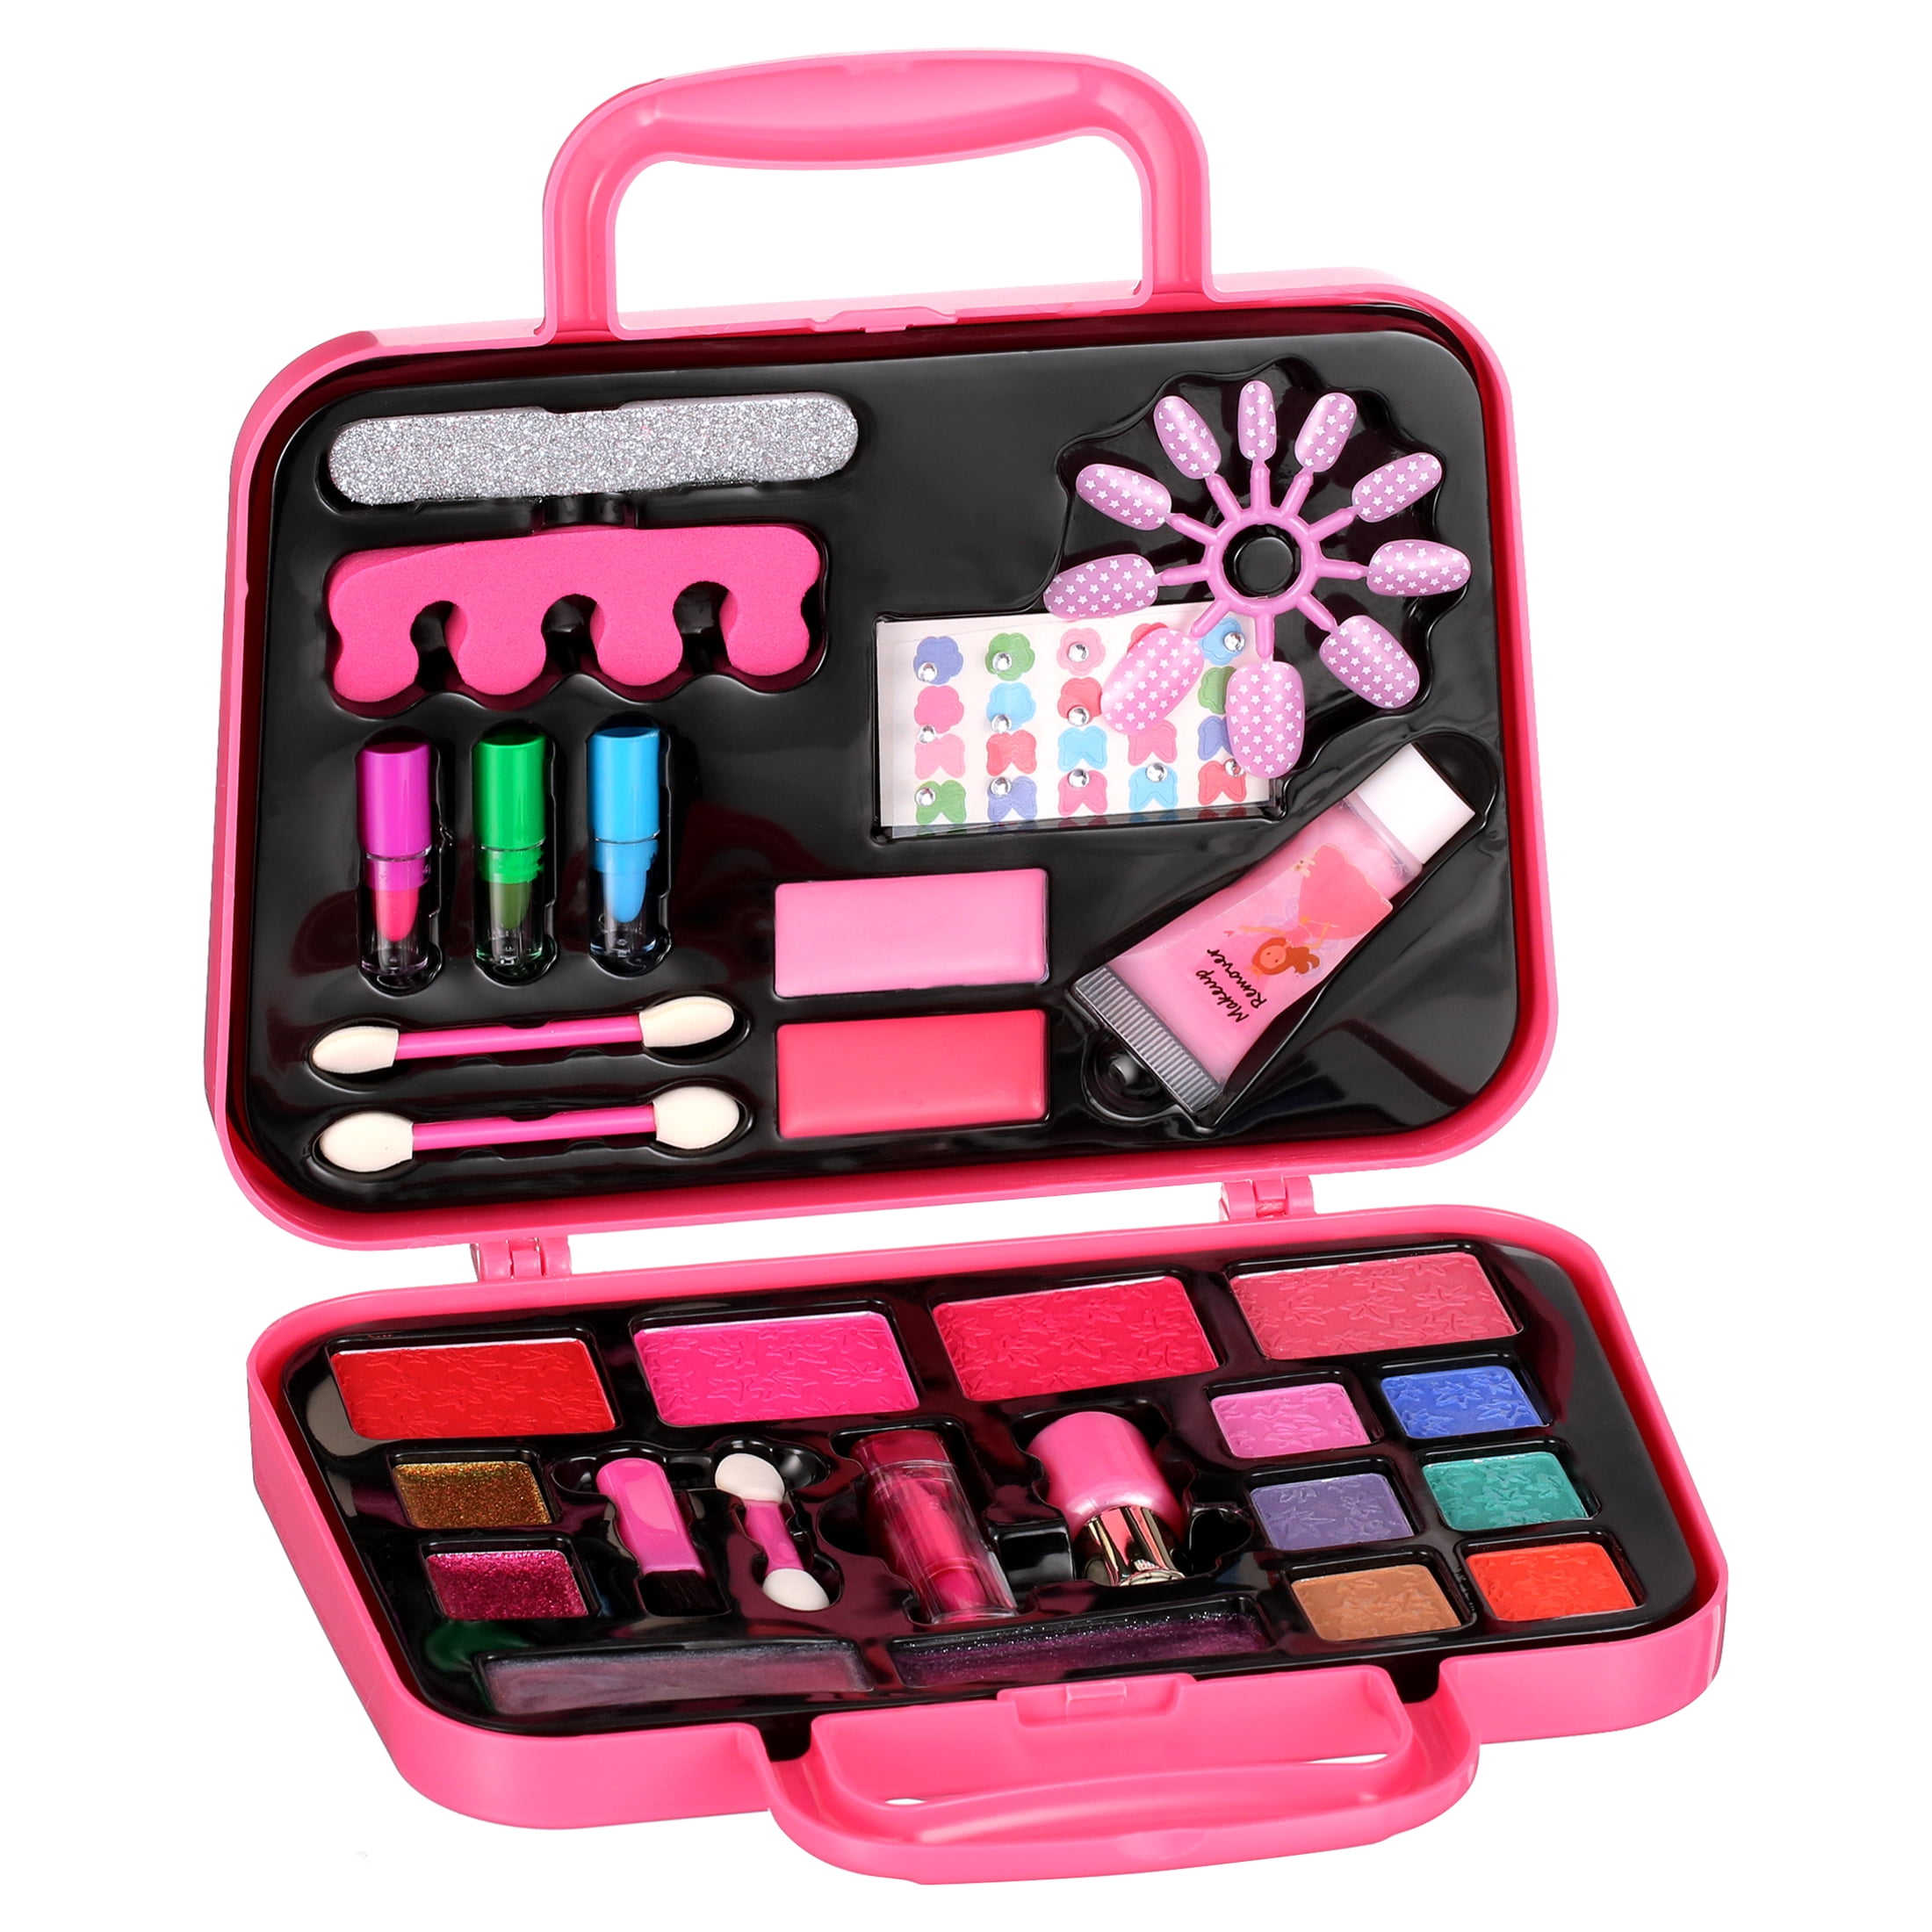  Toysical Makeup Kits for Teens - Flower Make Up